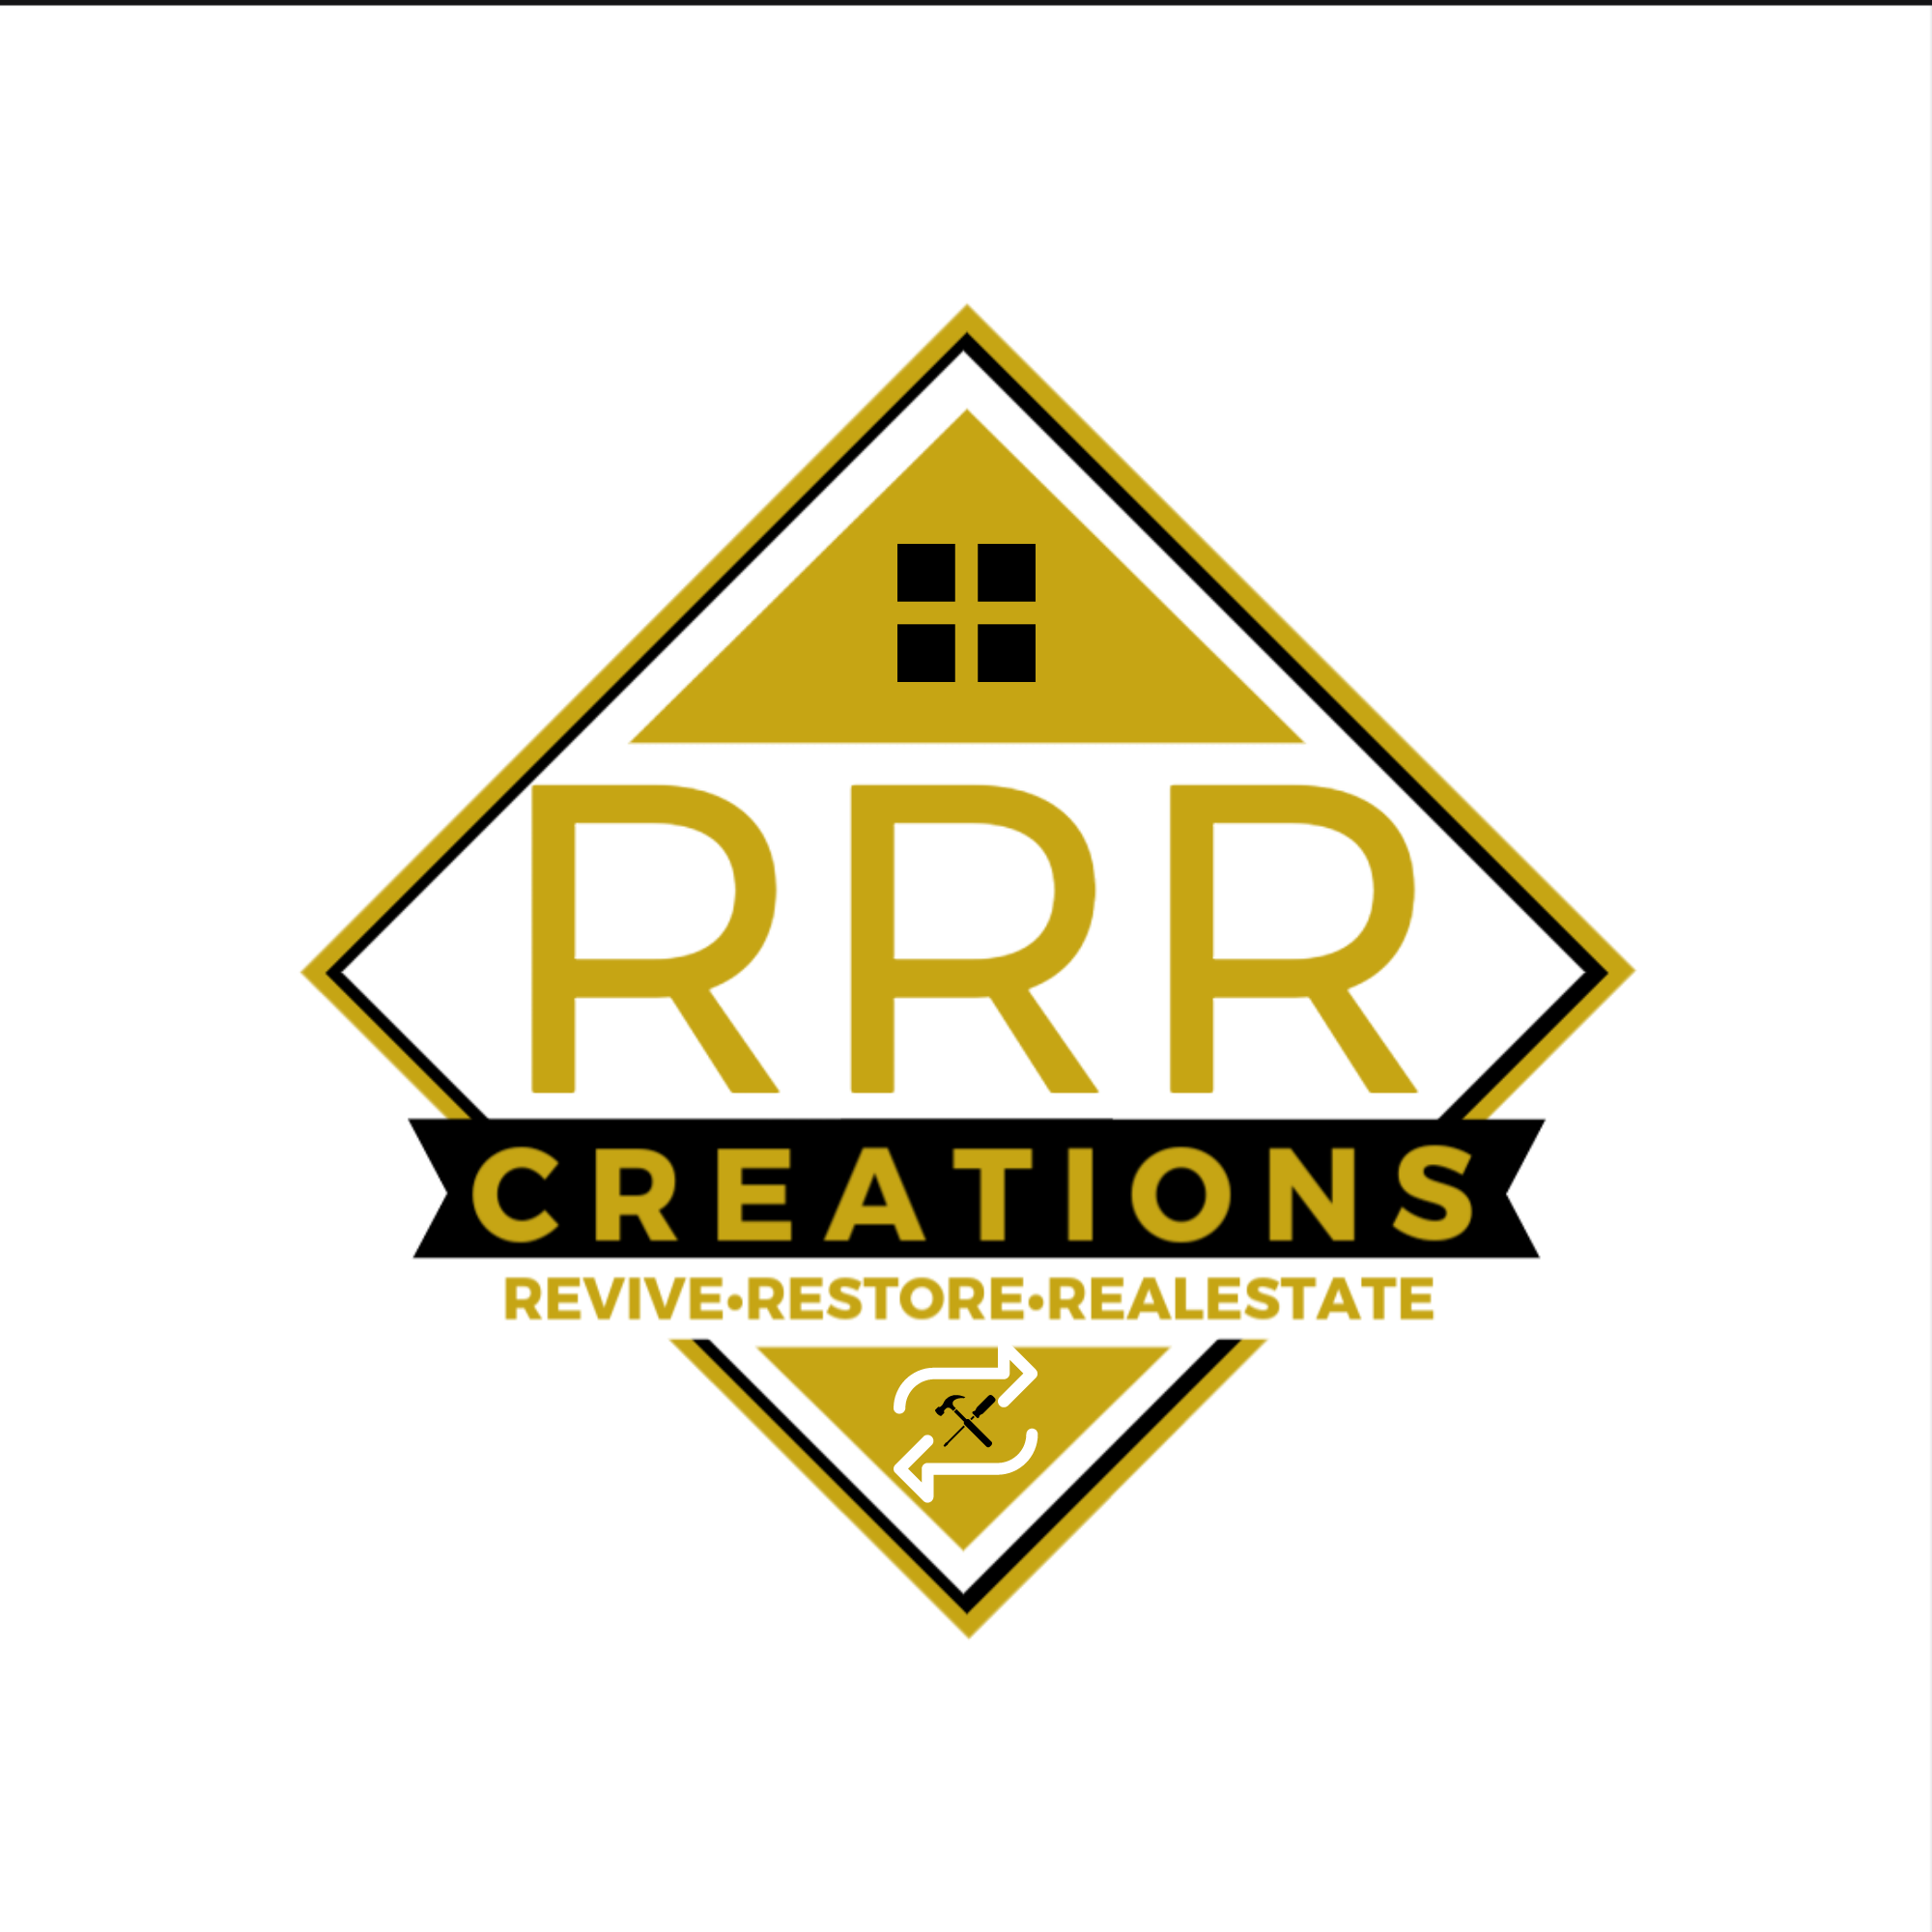 File:Rrr logo.jpg - Wikimedia Commons